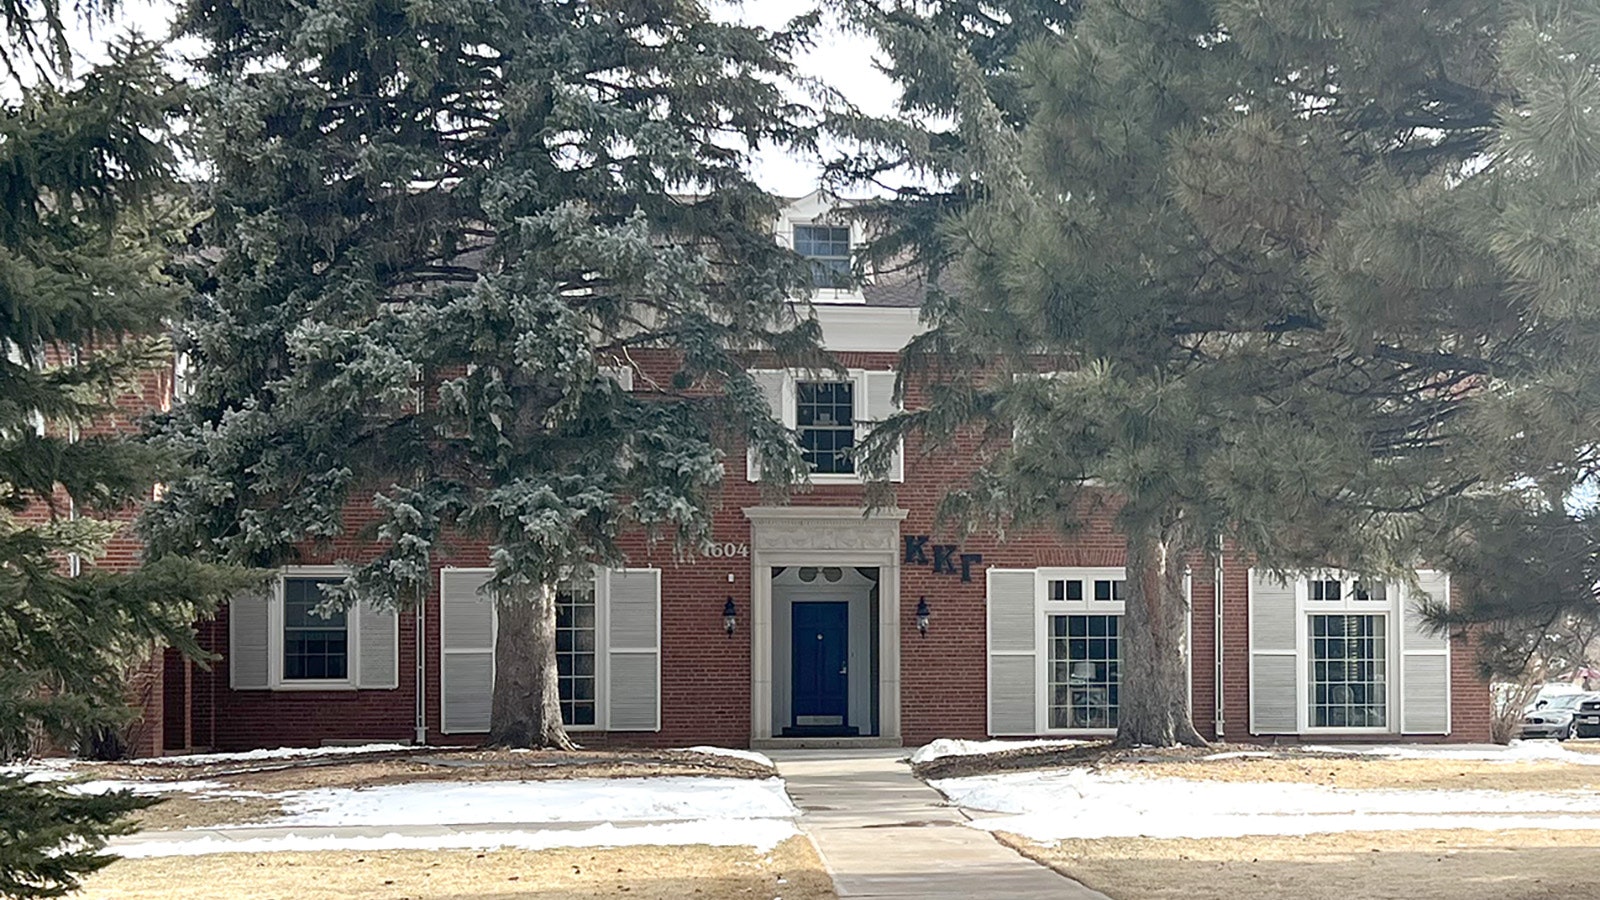 The Kappa Kappa Gamma sorority house at the University of Wyoming.